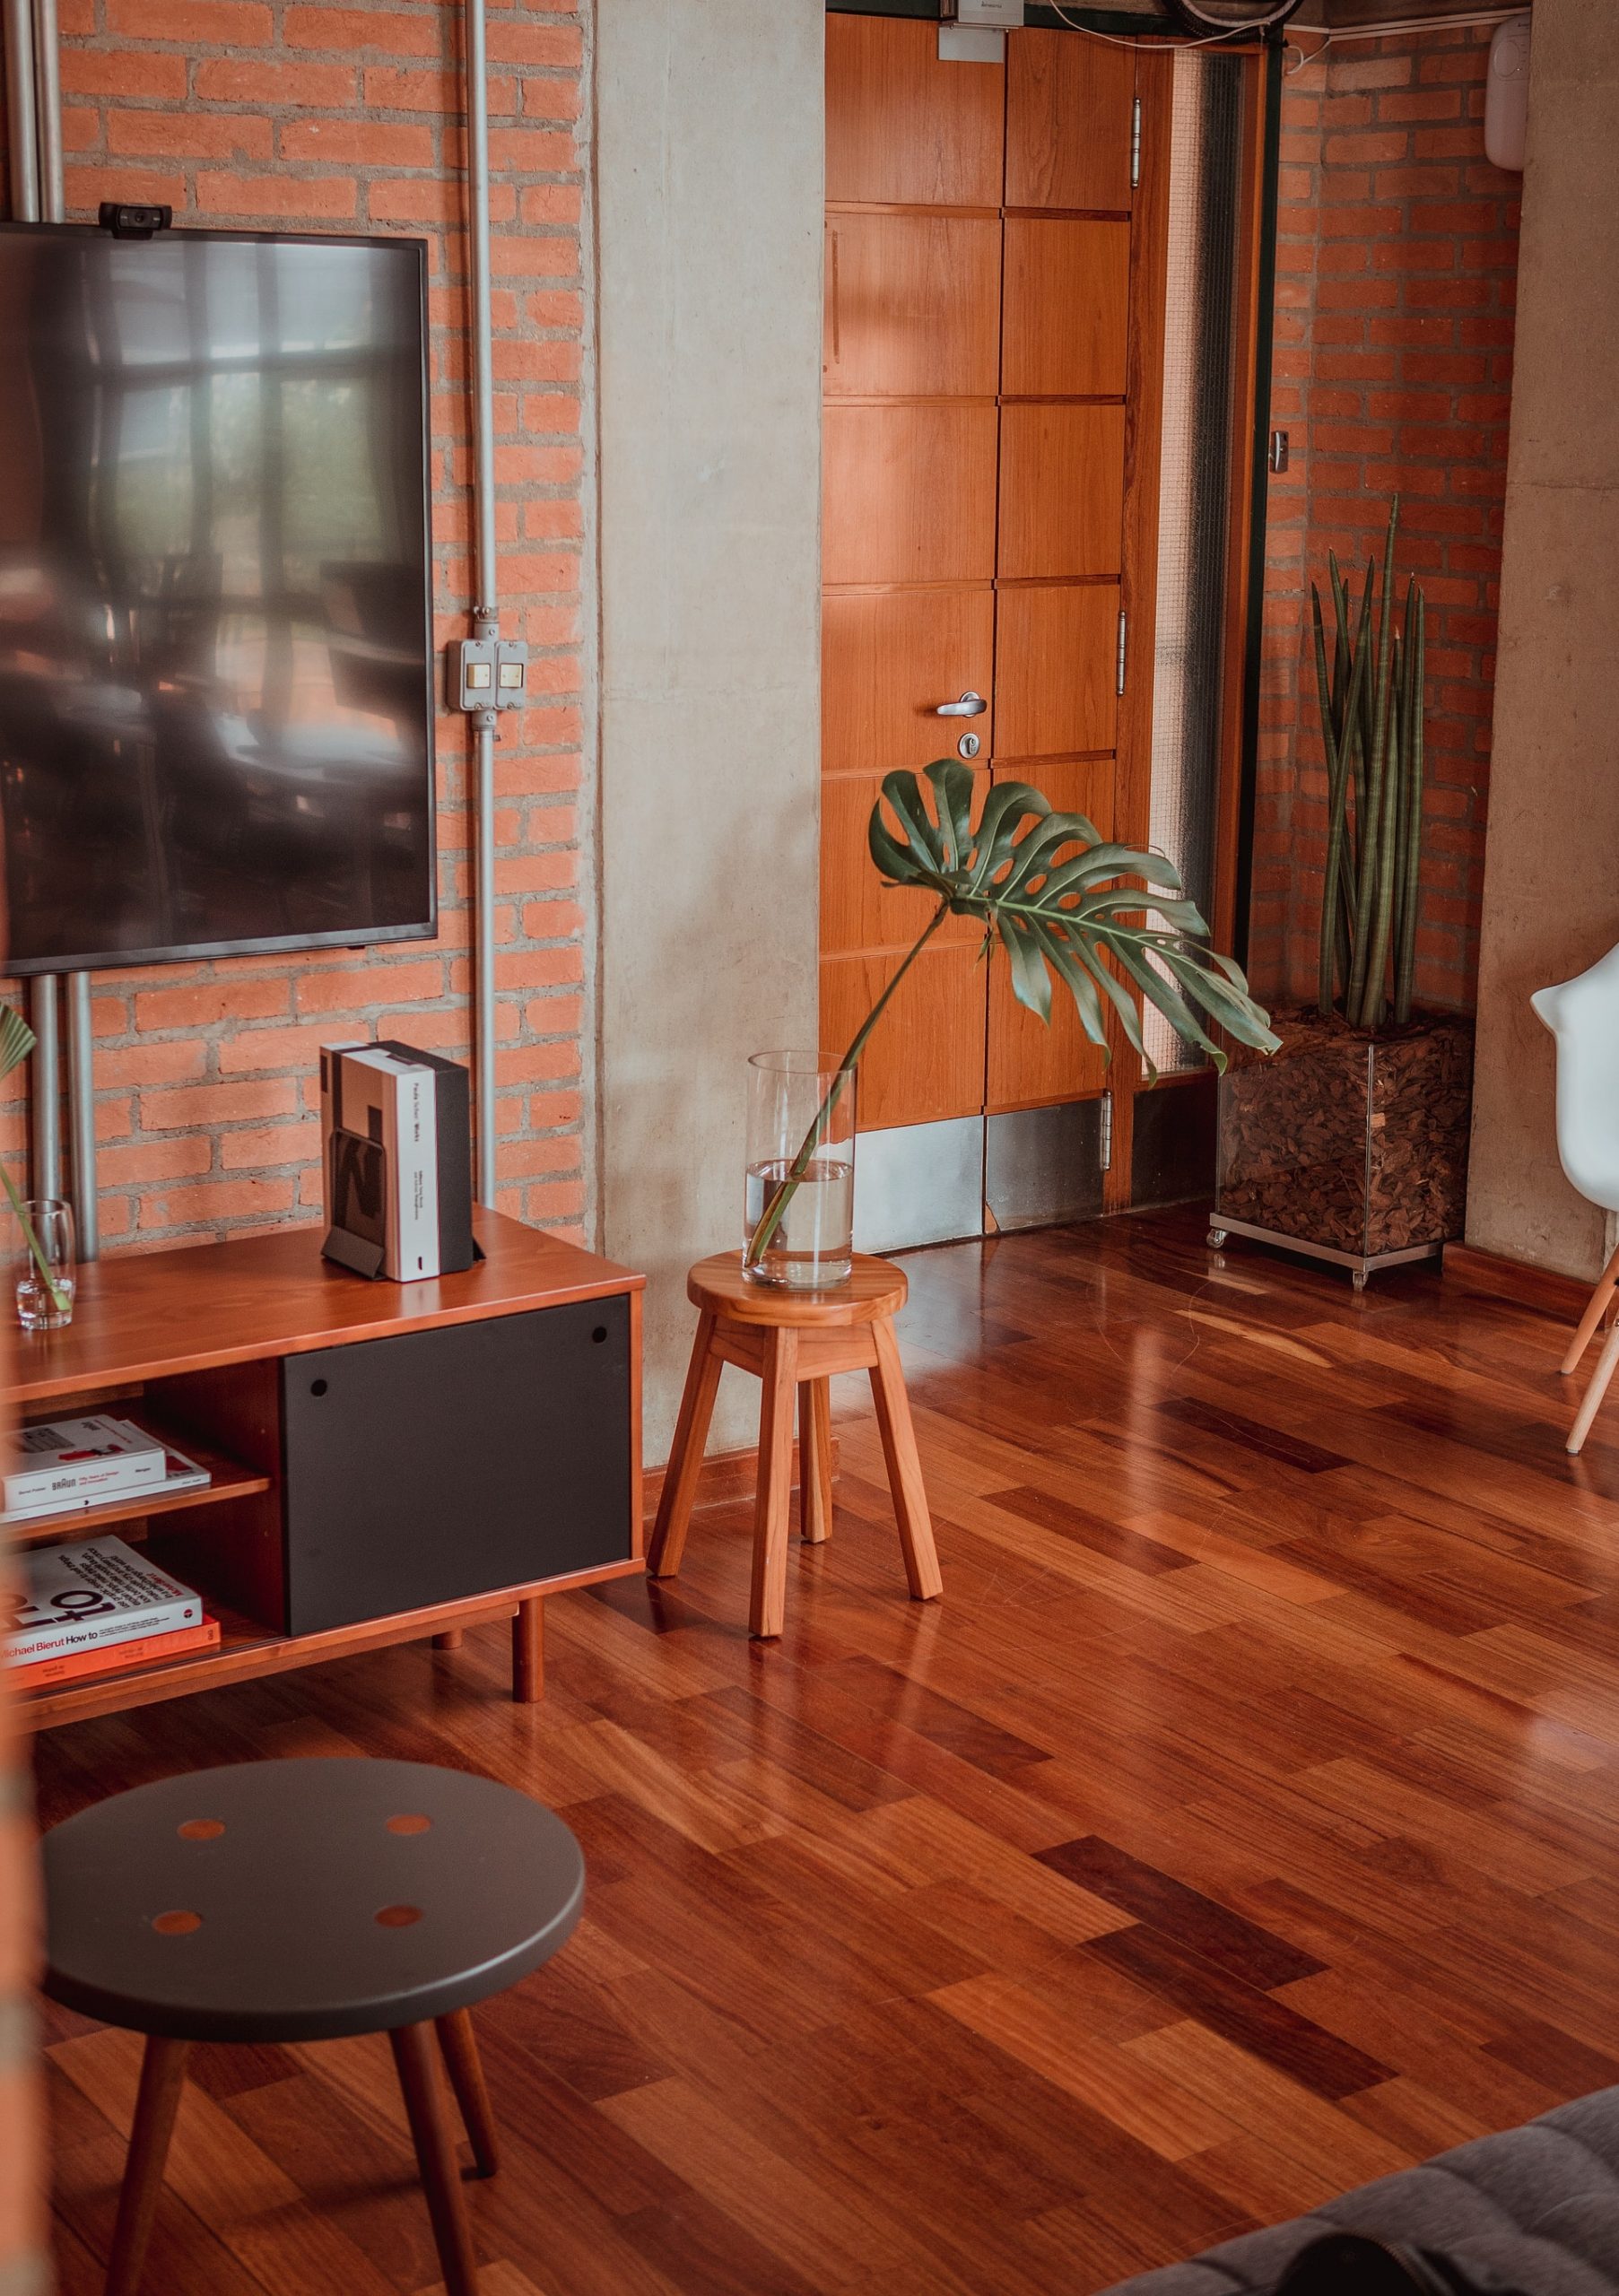 A room with a Brazilian cherry hardwood floor